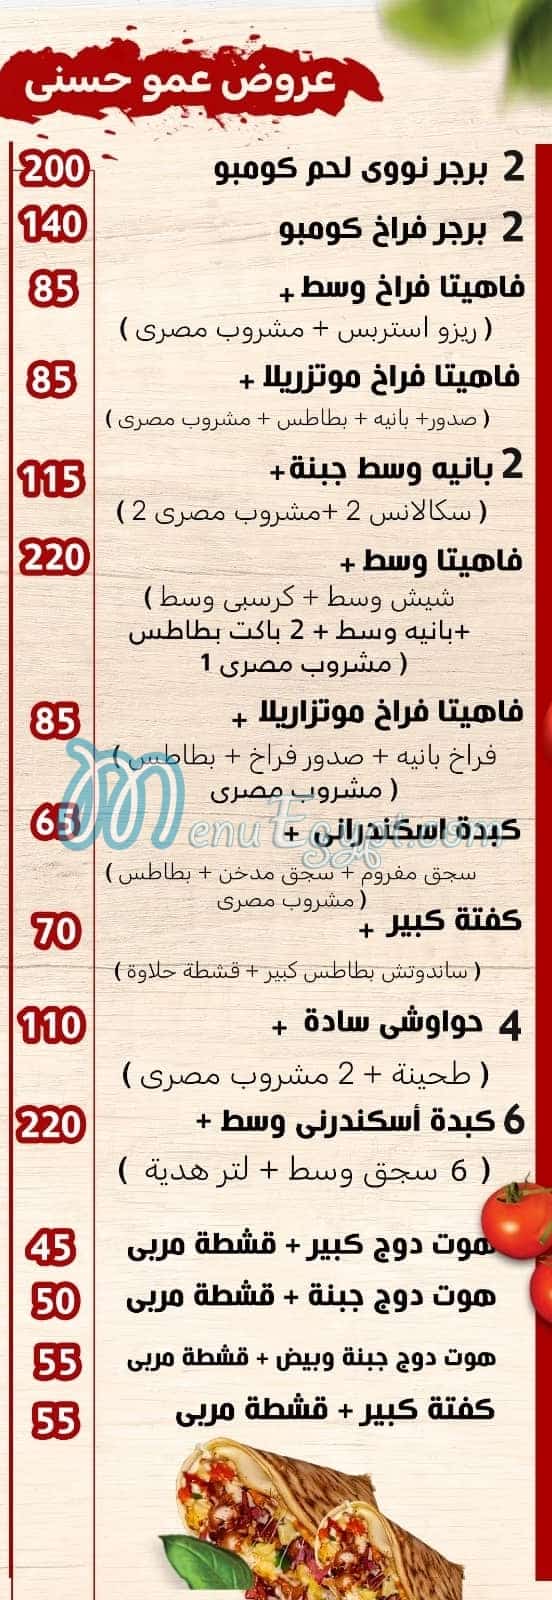 Amo Hosny menu Egypt